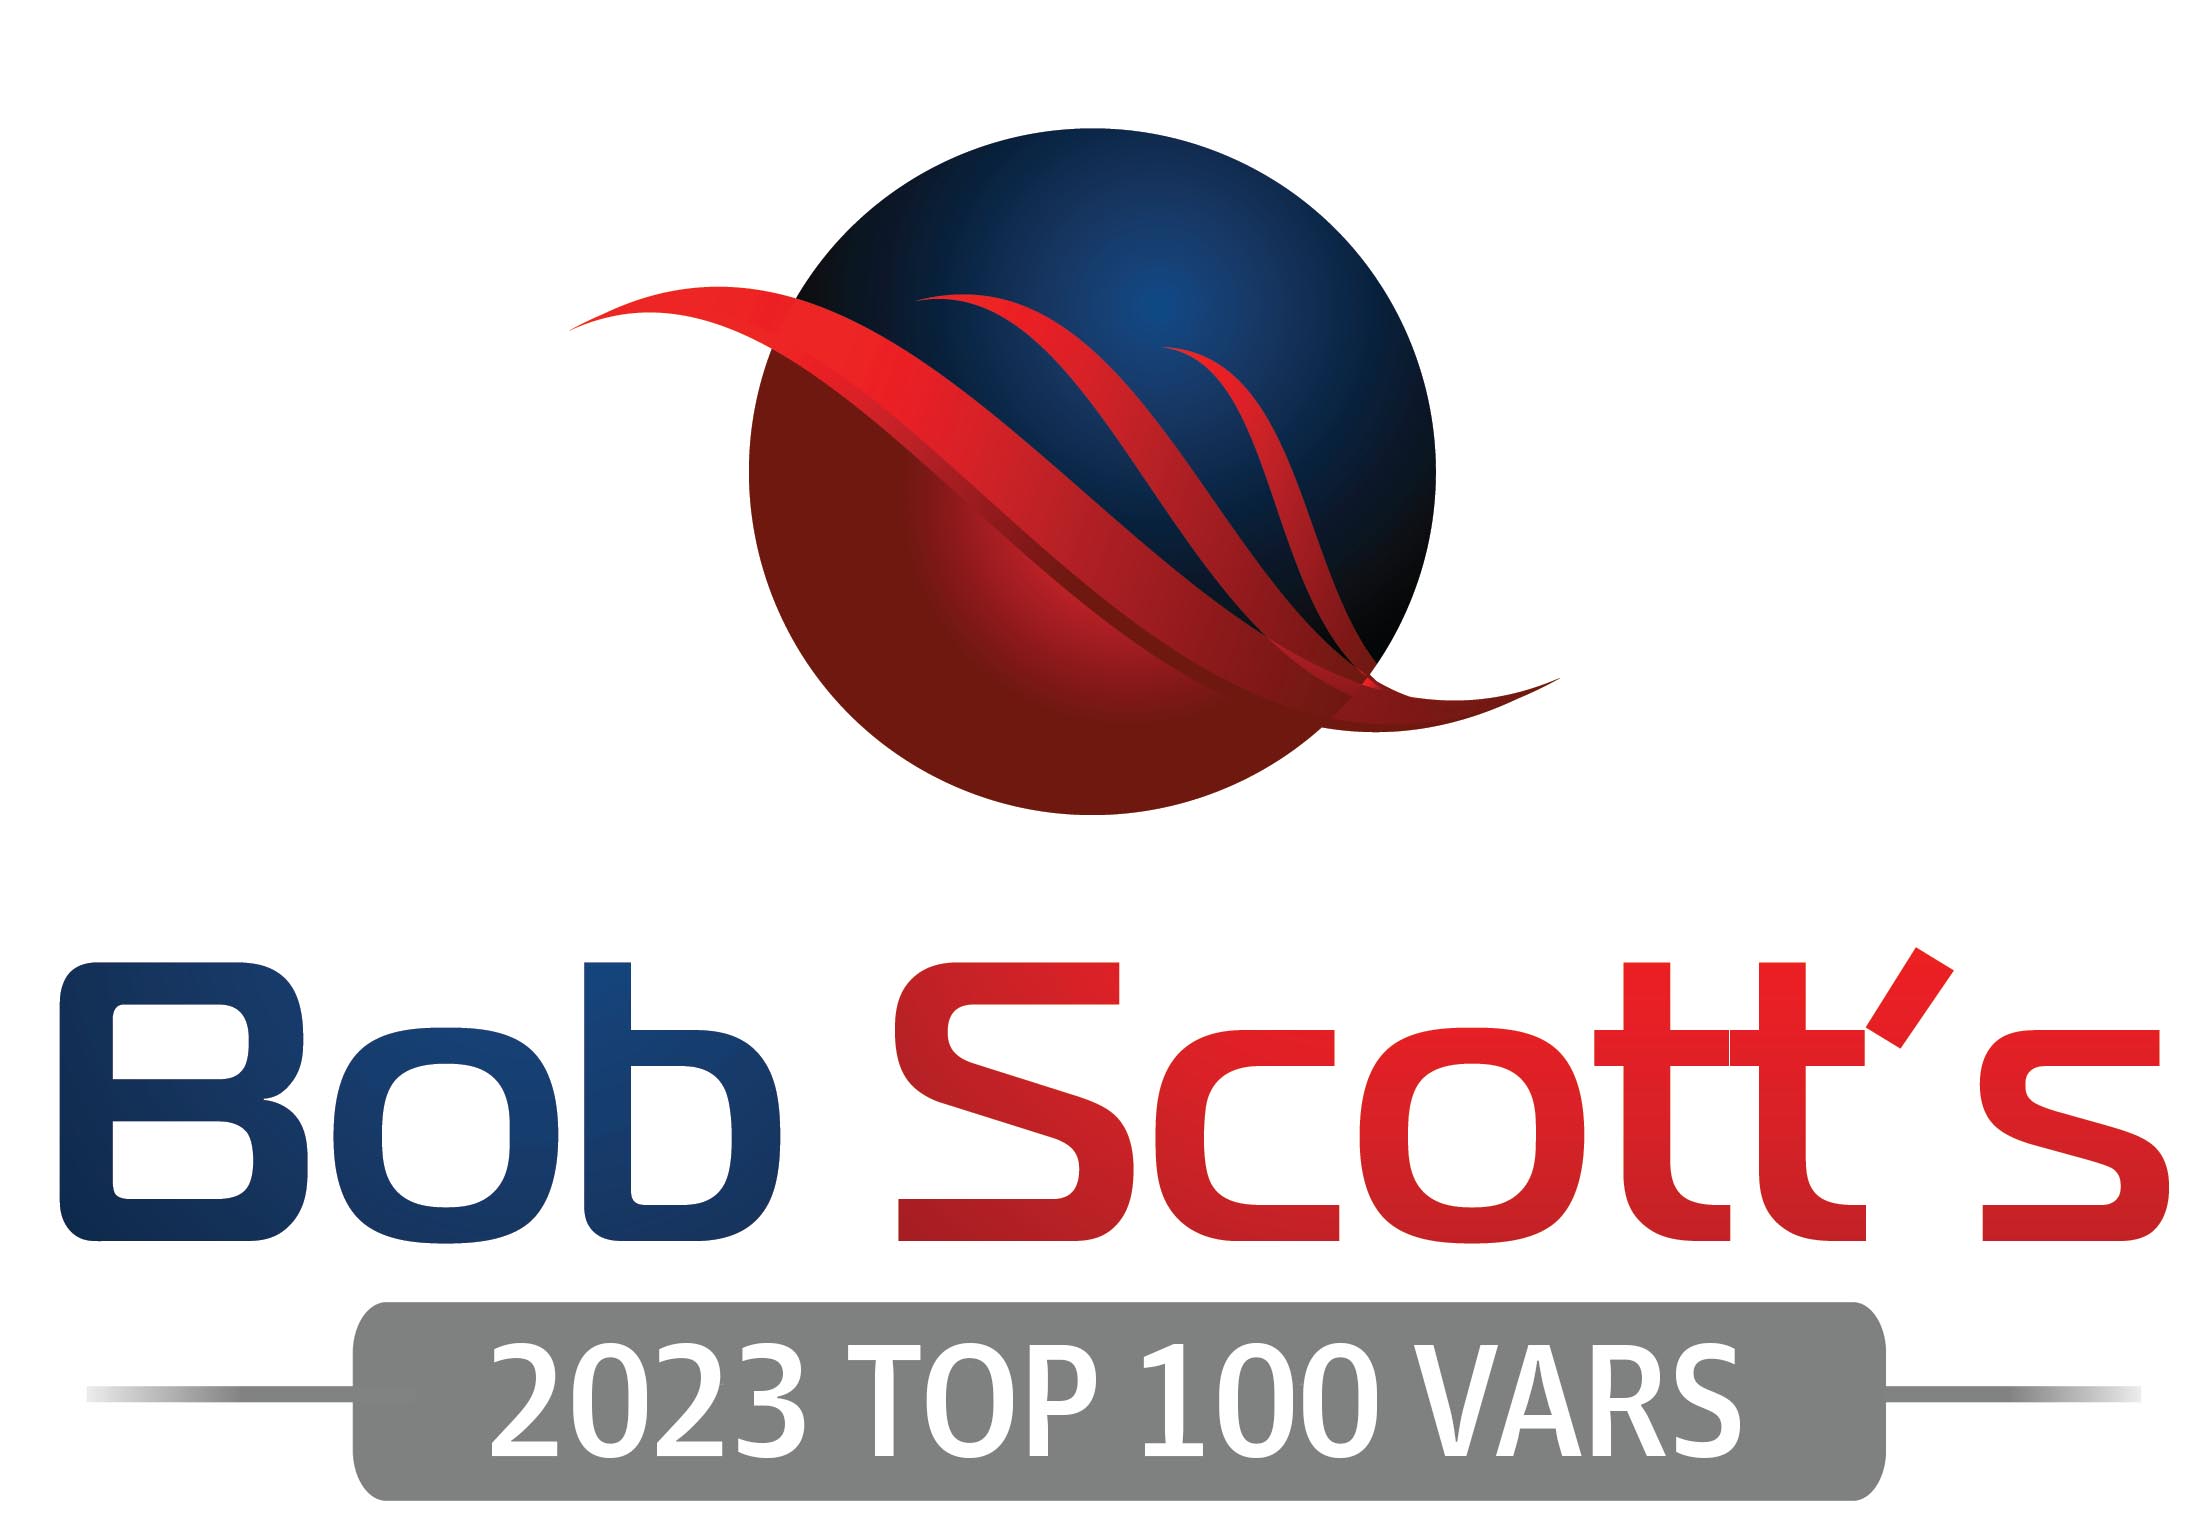 Bob Scott's 2023 Top 100 VARs logo